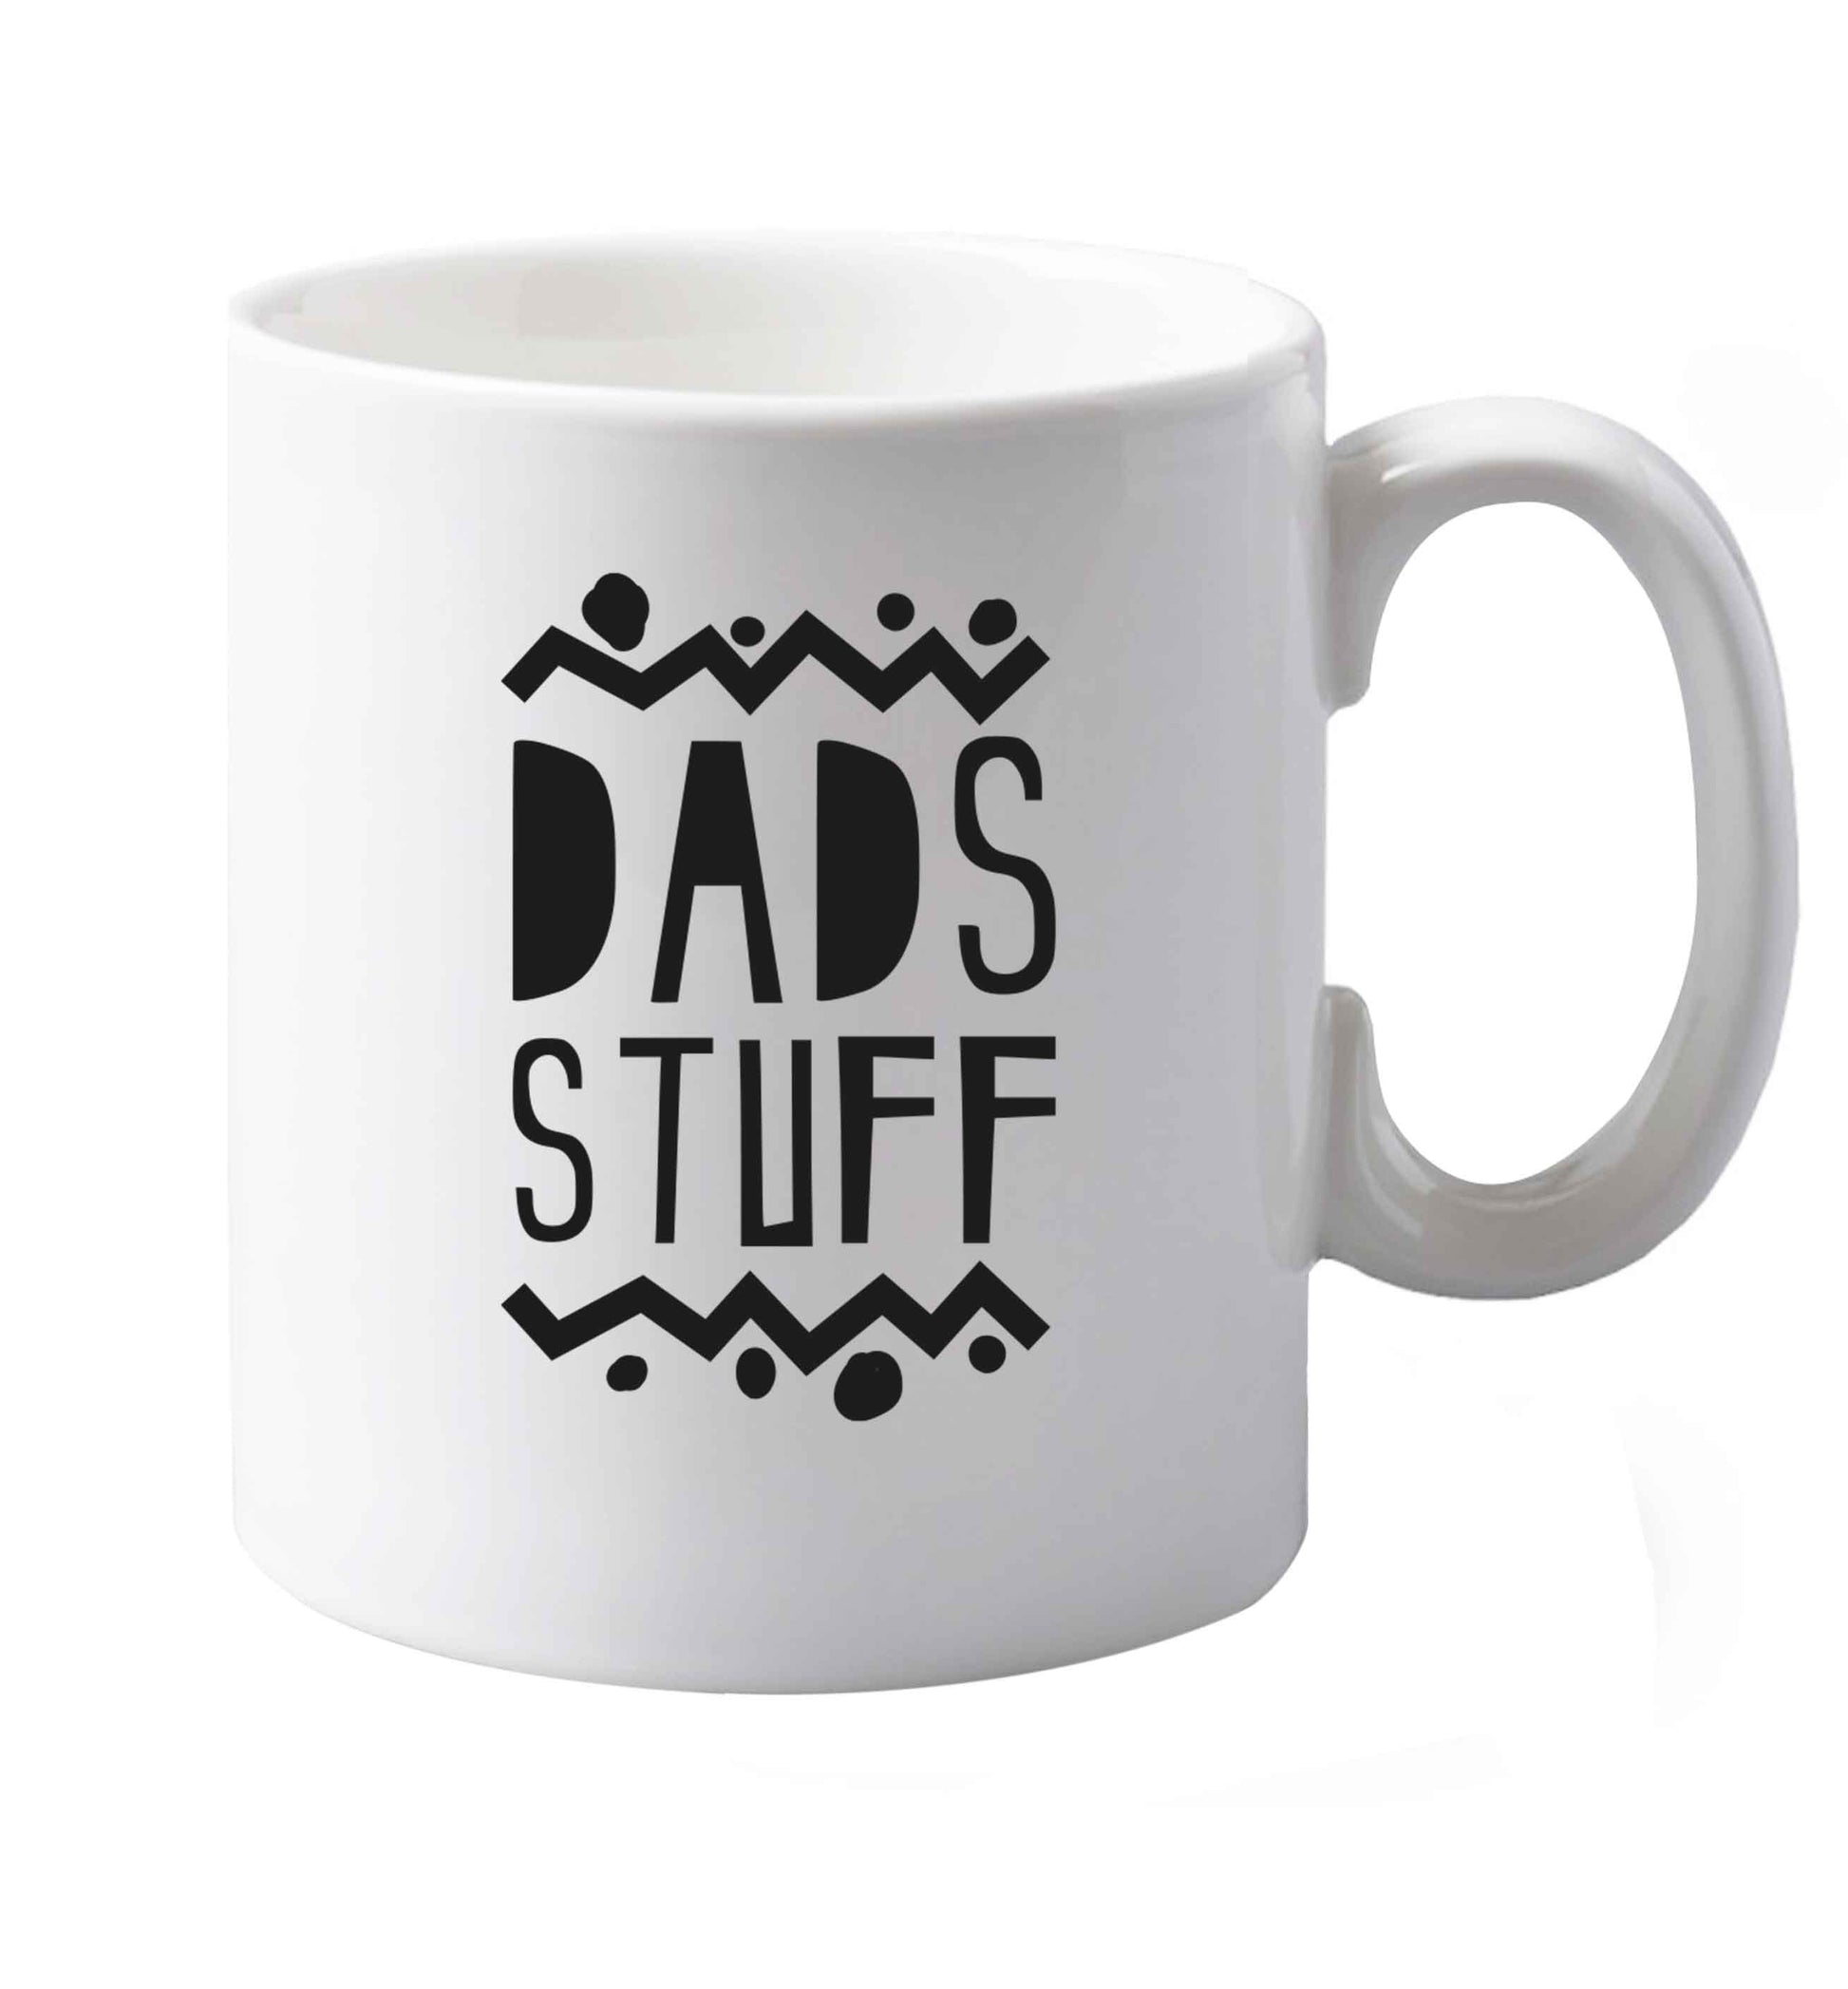 10 oz Dads stuff ceramic mug both sides